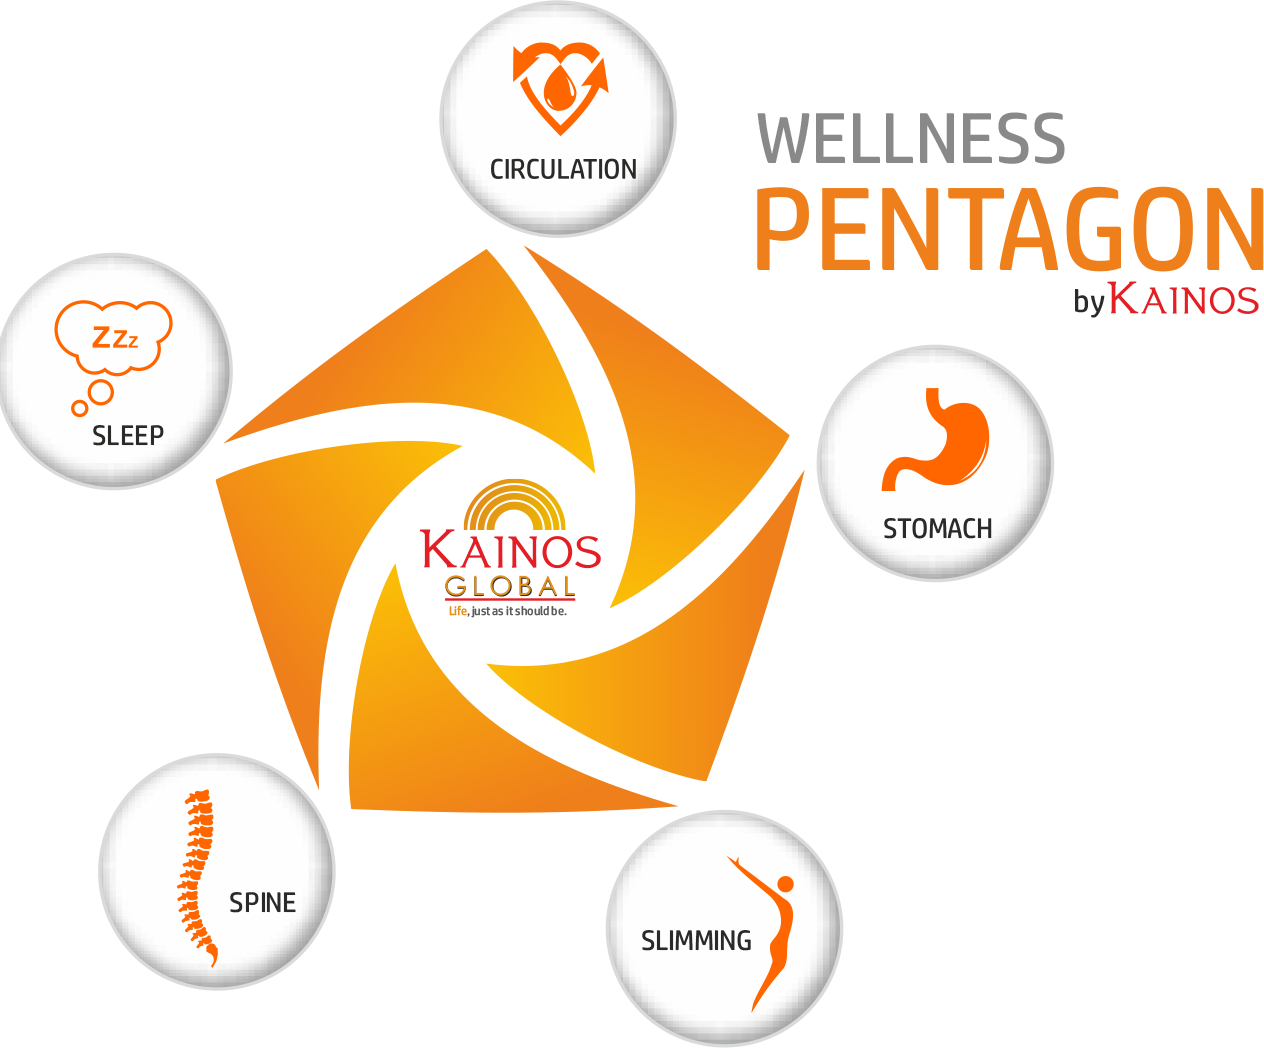 Wellness Pentagon Infographic Kainos Global PNG image